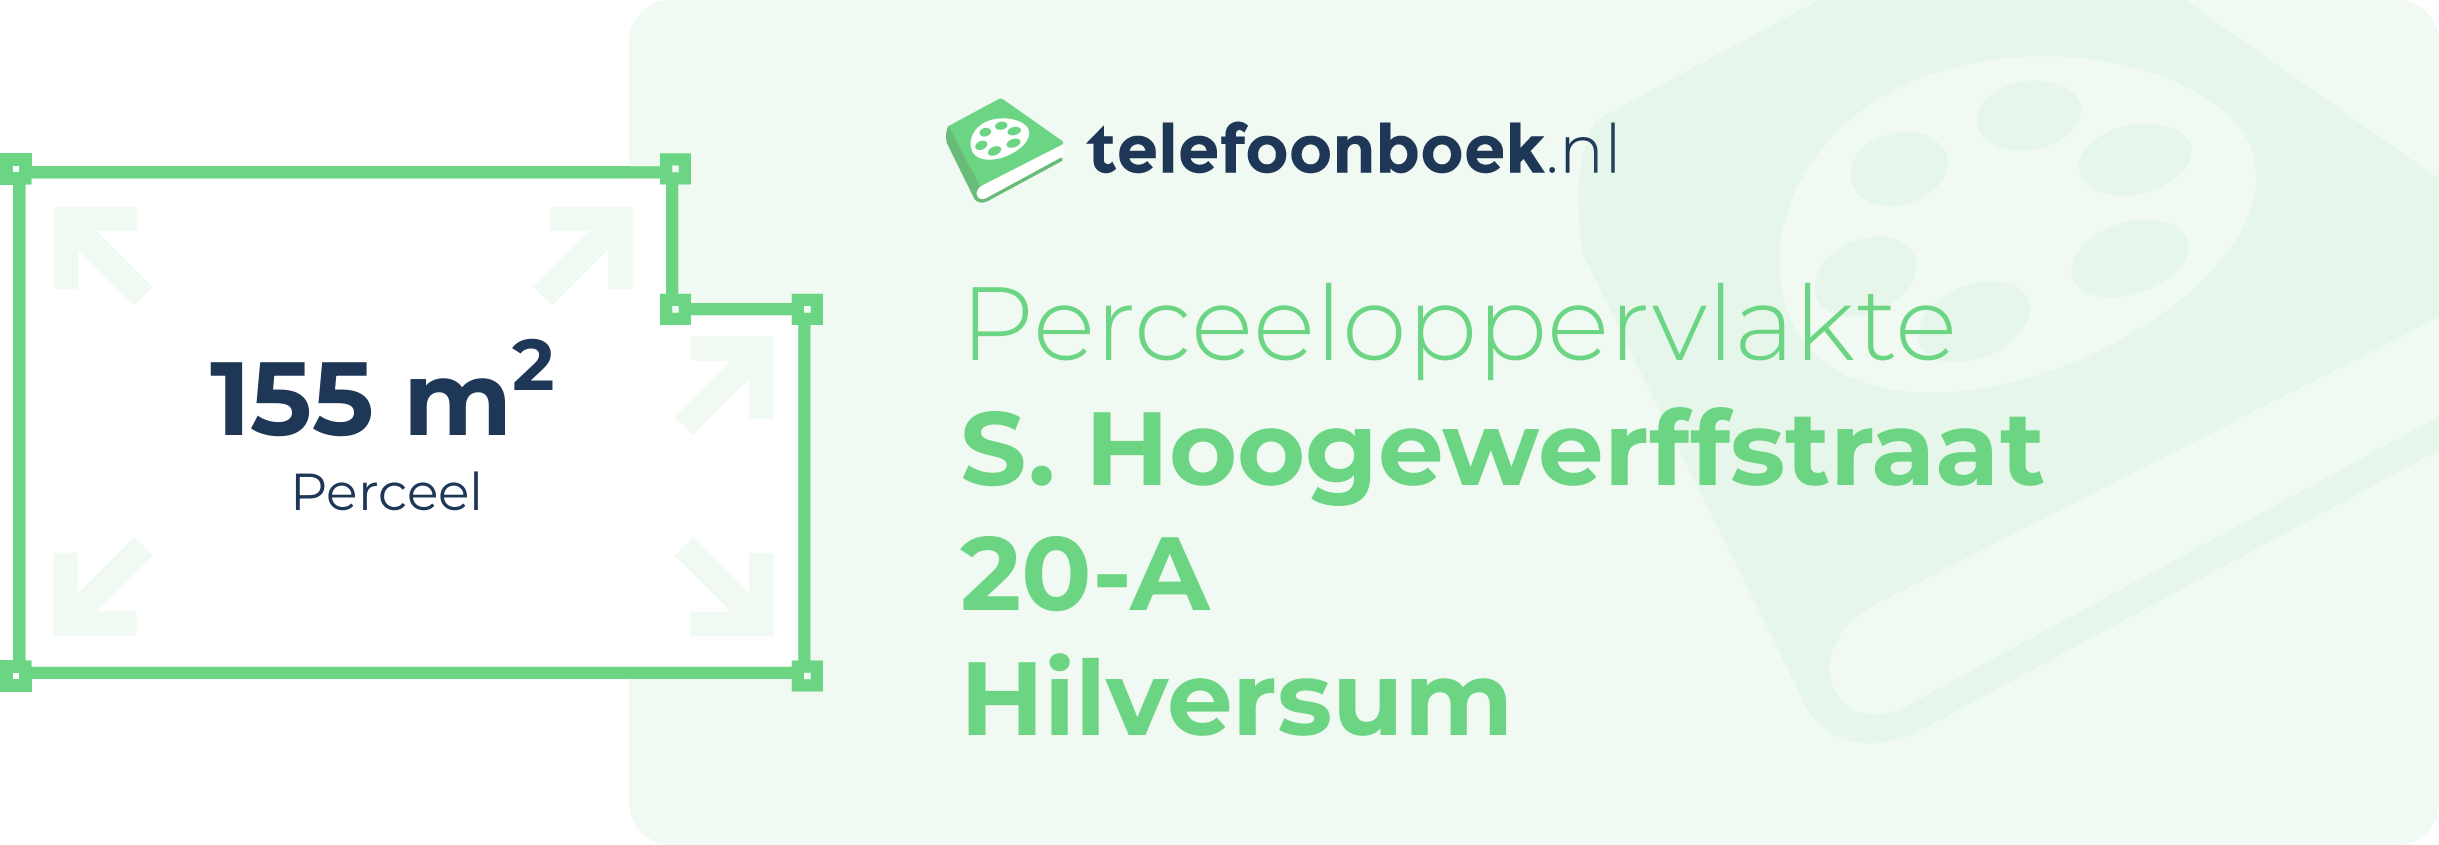 Perceeloppervlakte S. Hoogewerffstraat 20-A Hilversum